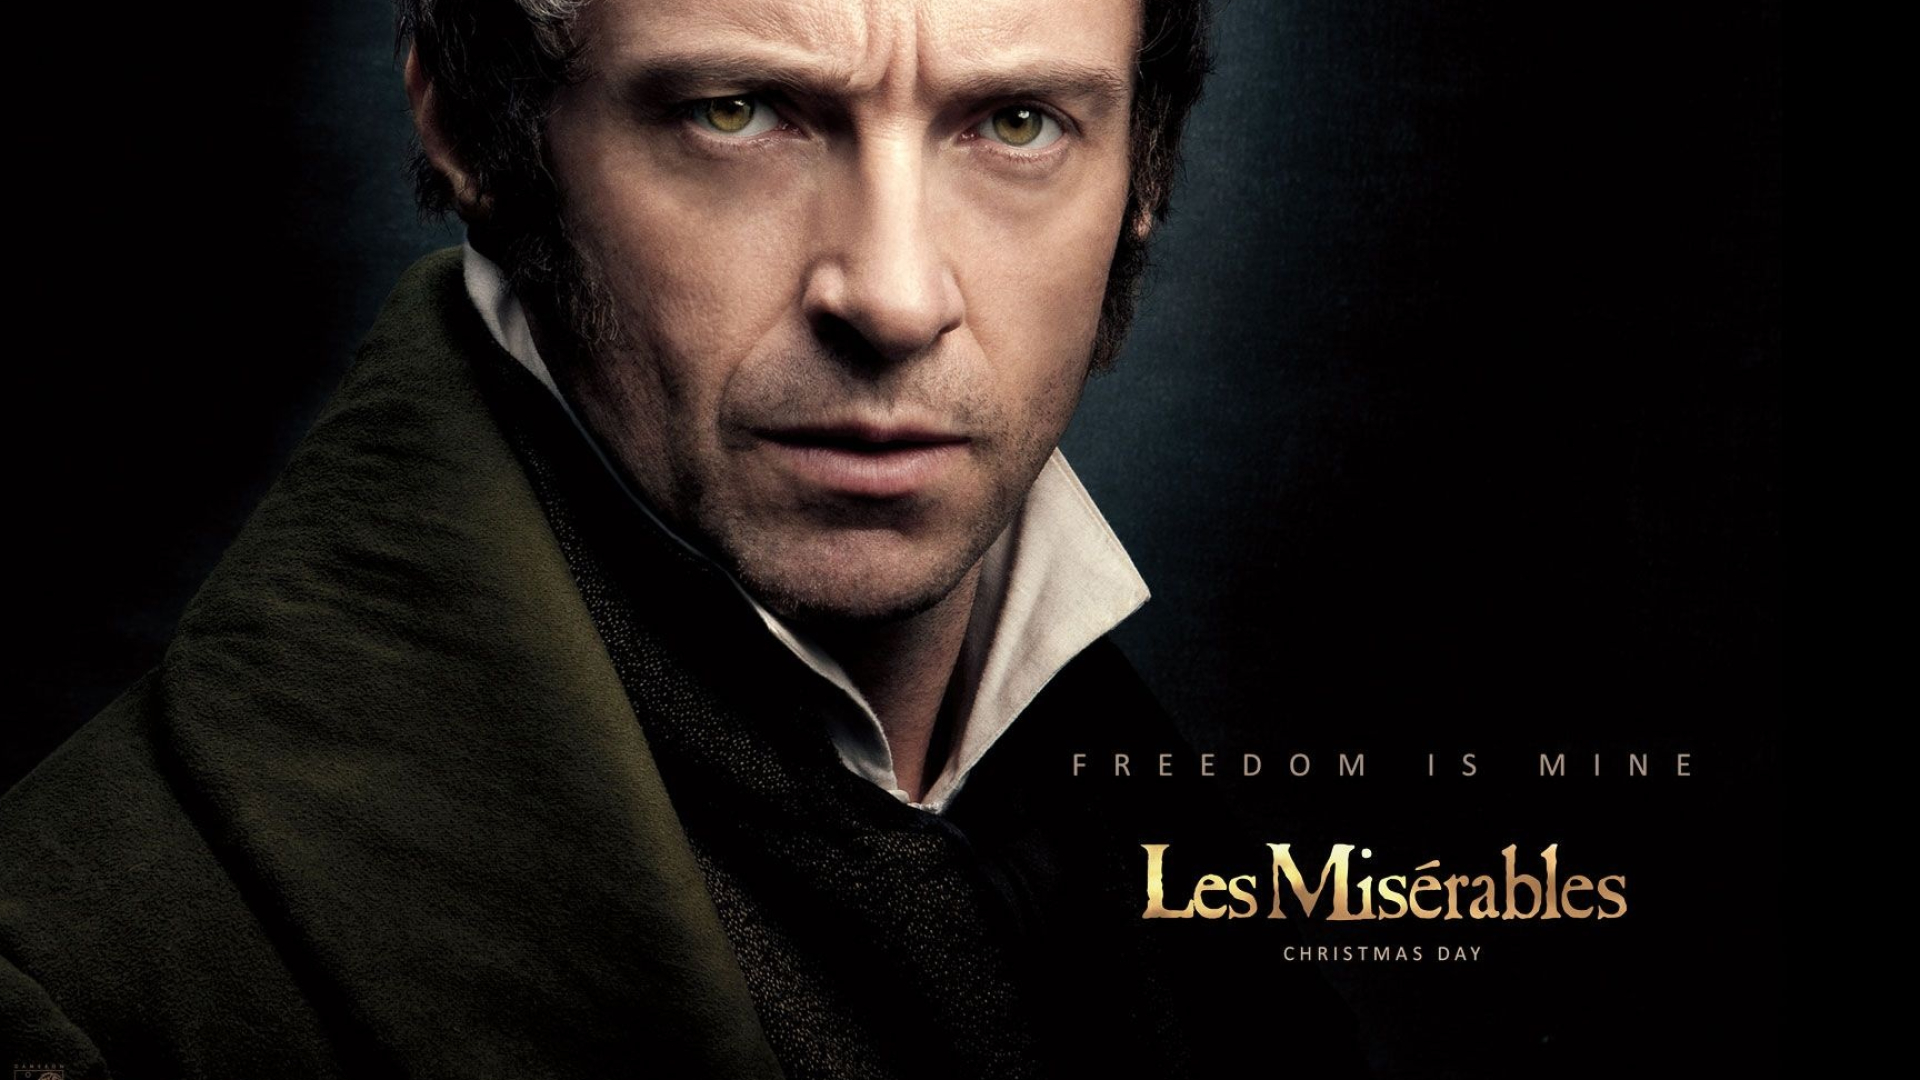 Les Miserables movie, Wallpaper, Les Miserables wallpapers, 2012, 1920x1080 Full HD Desktop